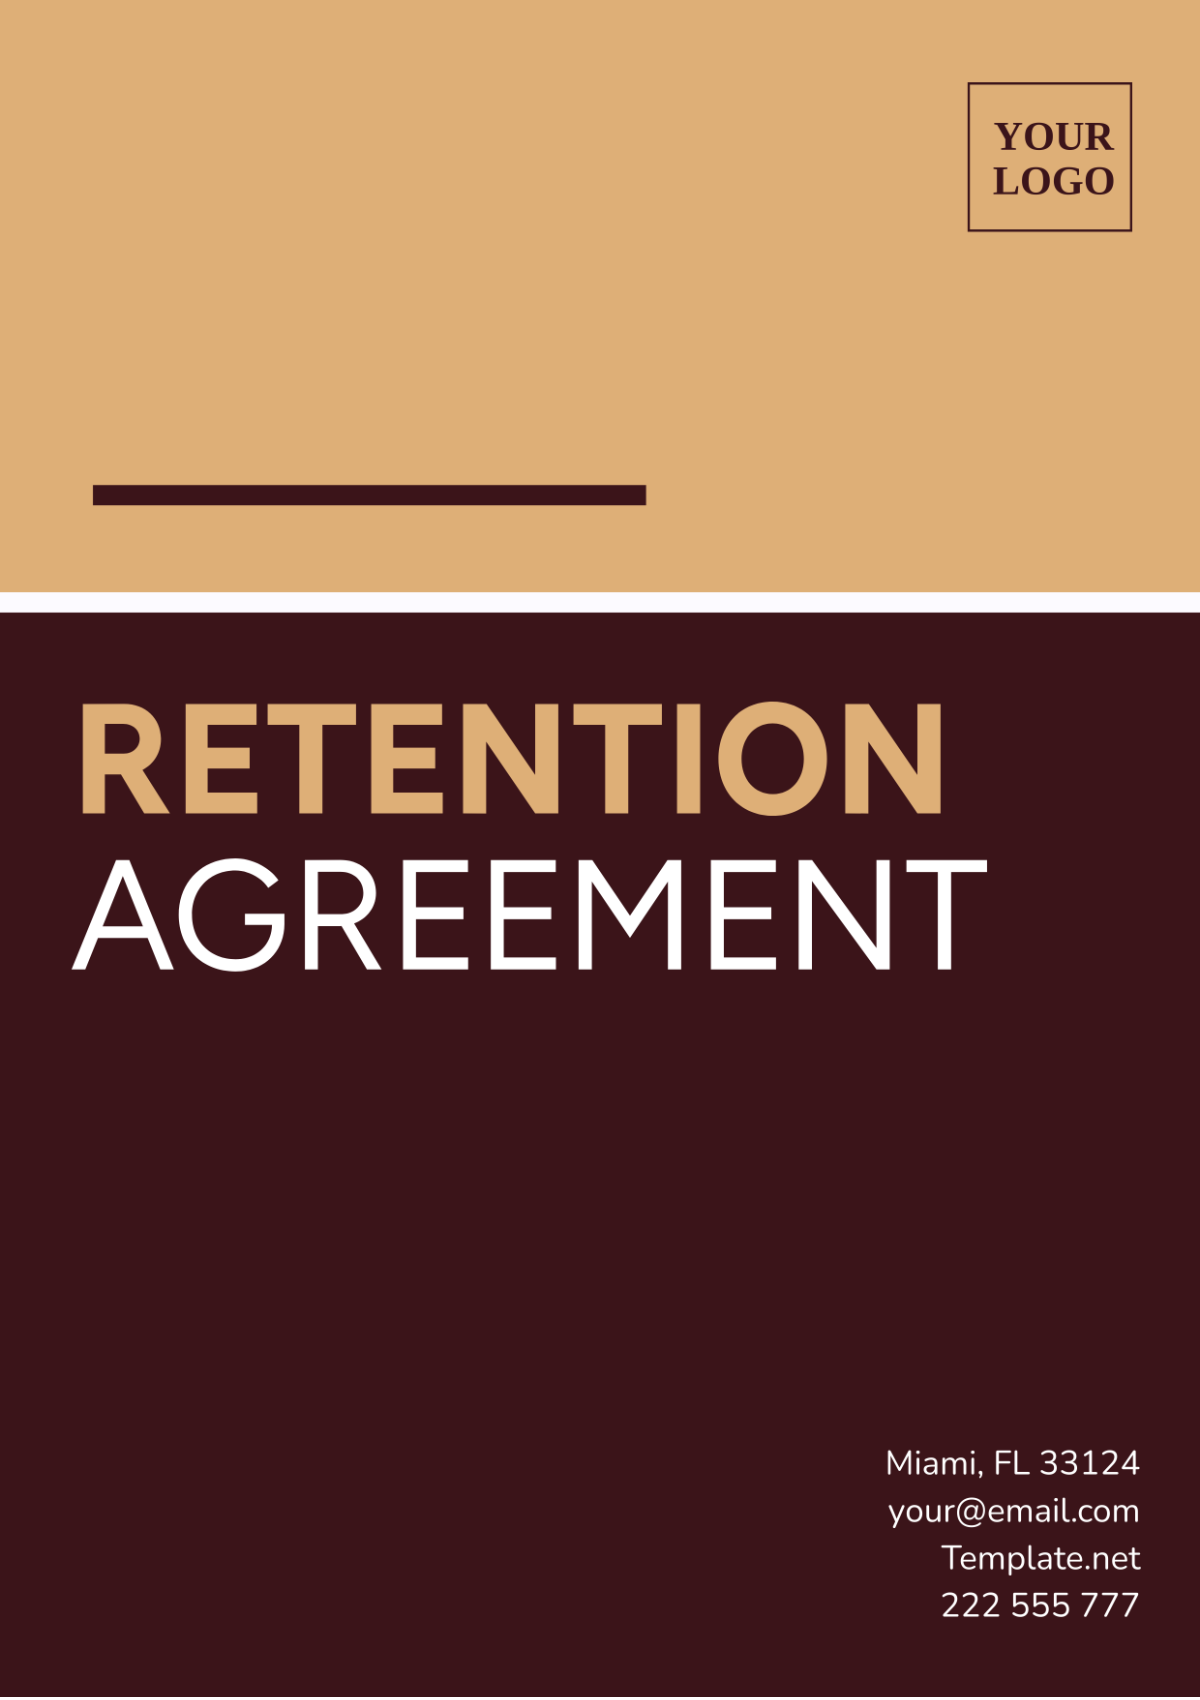 Retention Agreement Template